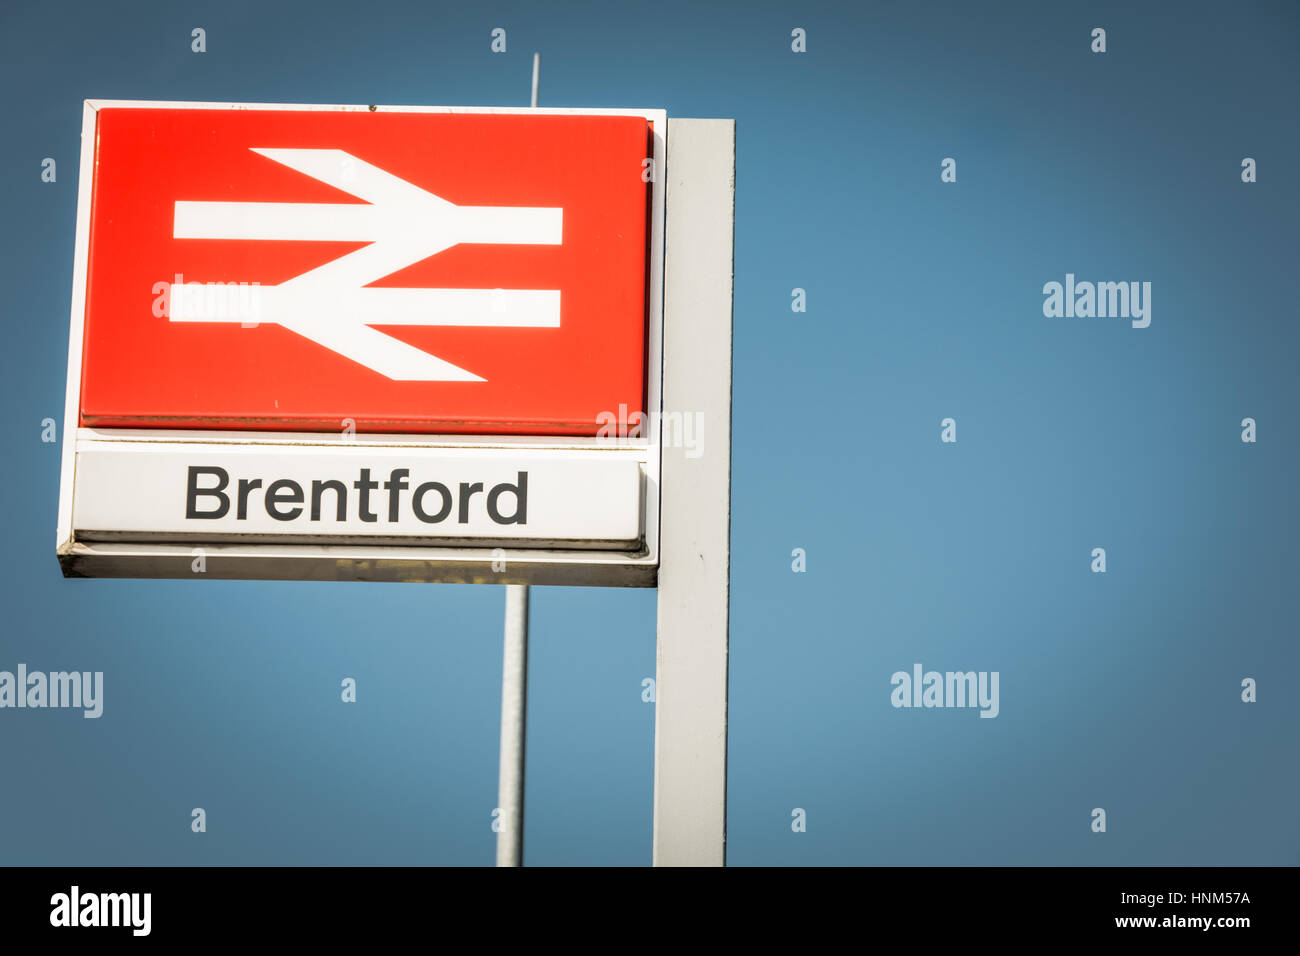 Network Rail signage outside Brentford Station in SW London, UK. Stock Photo